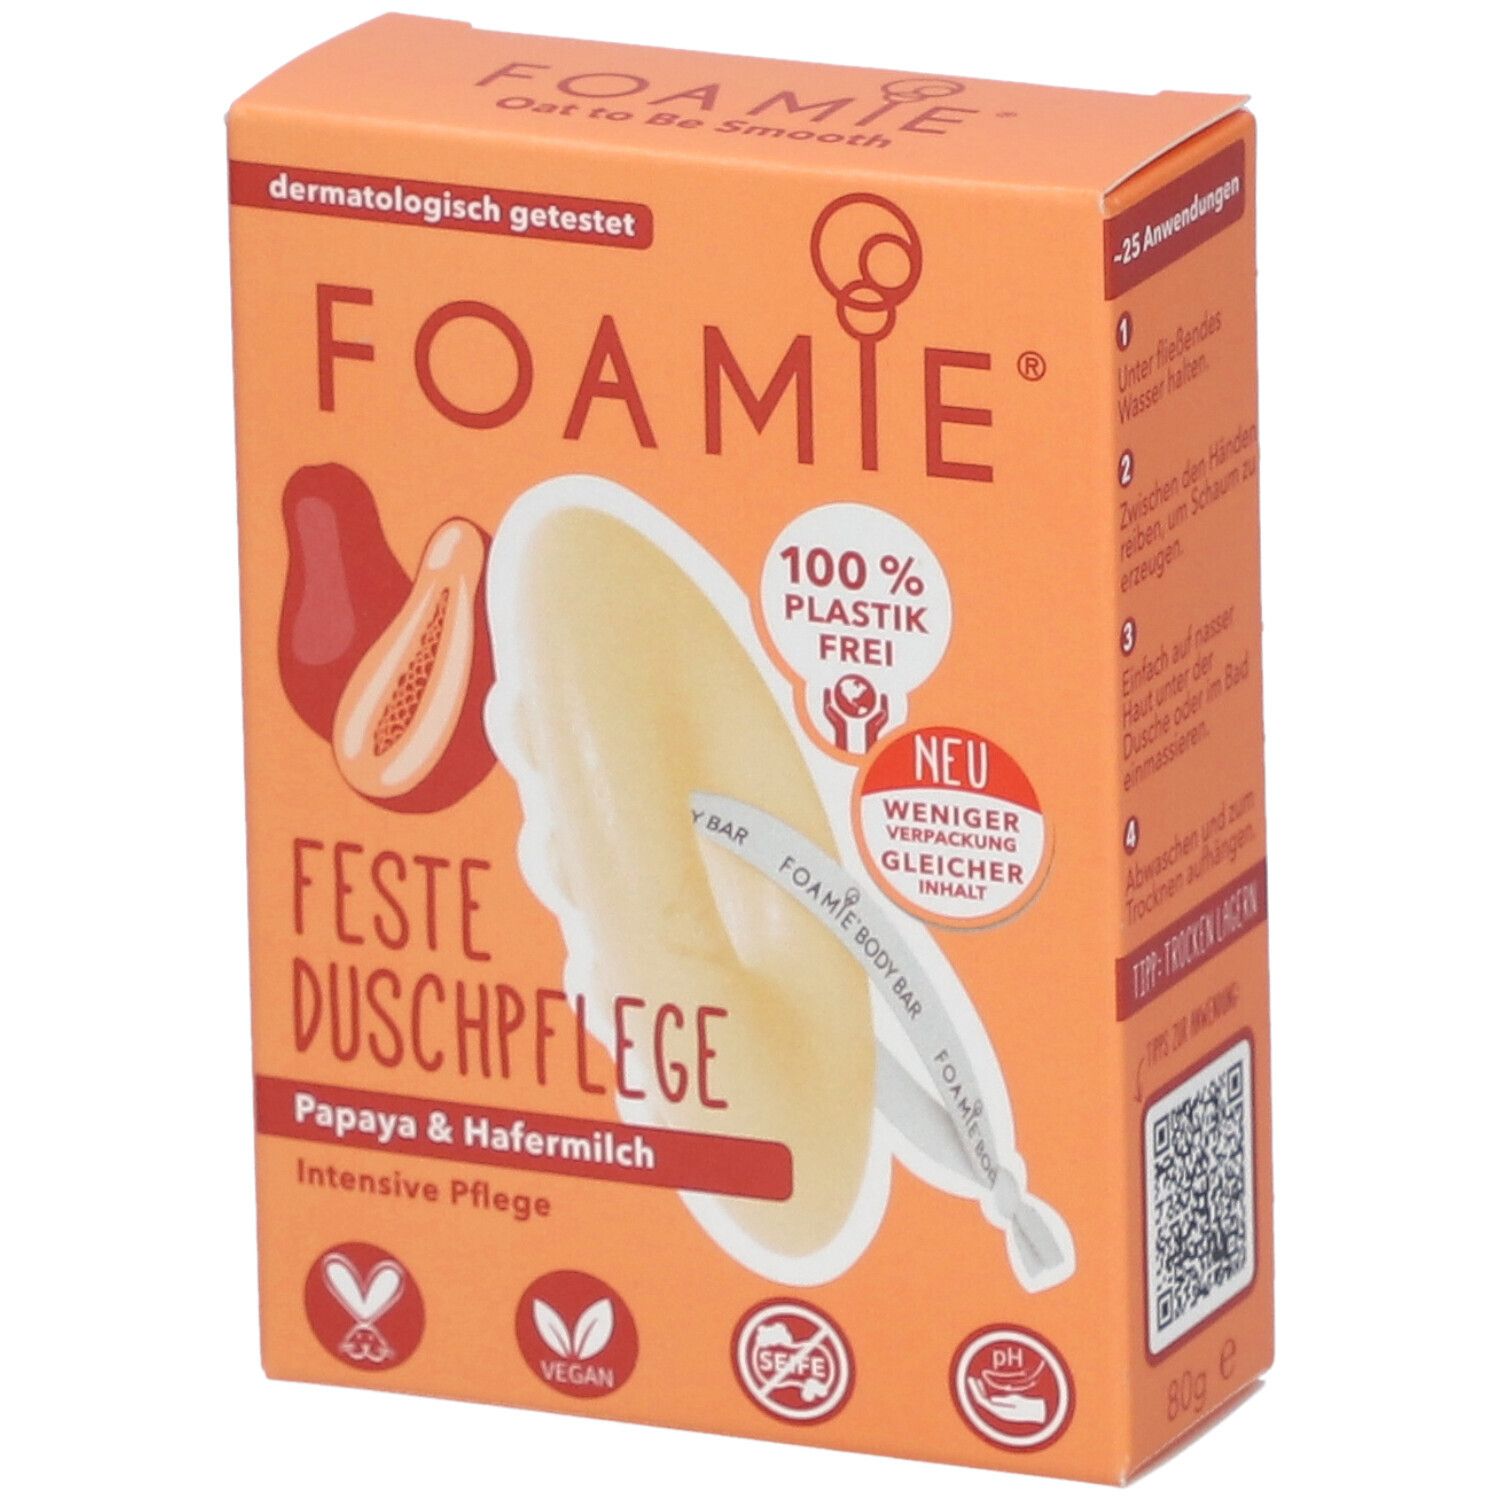 Image of FOAMIE® Feste Duschpflege Papaya & Hafermilch